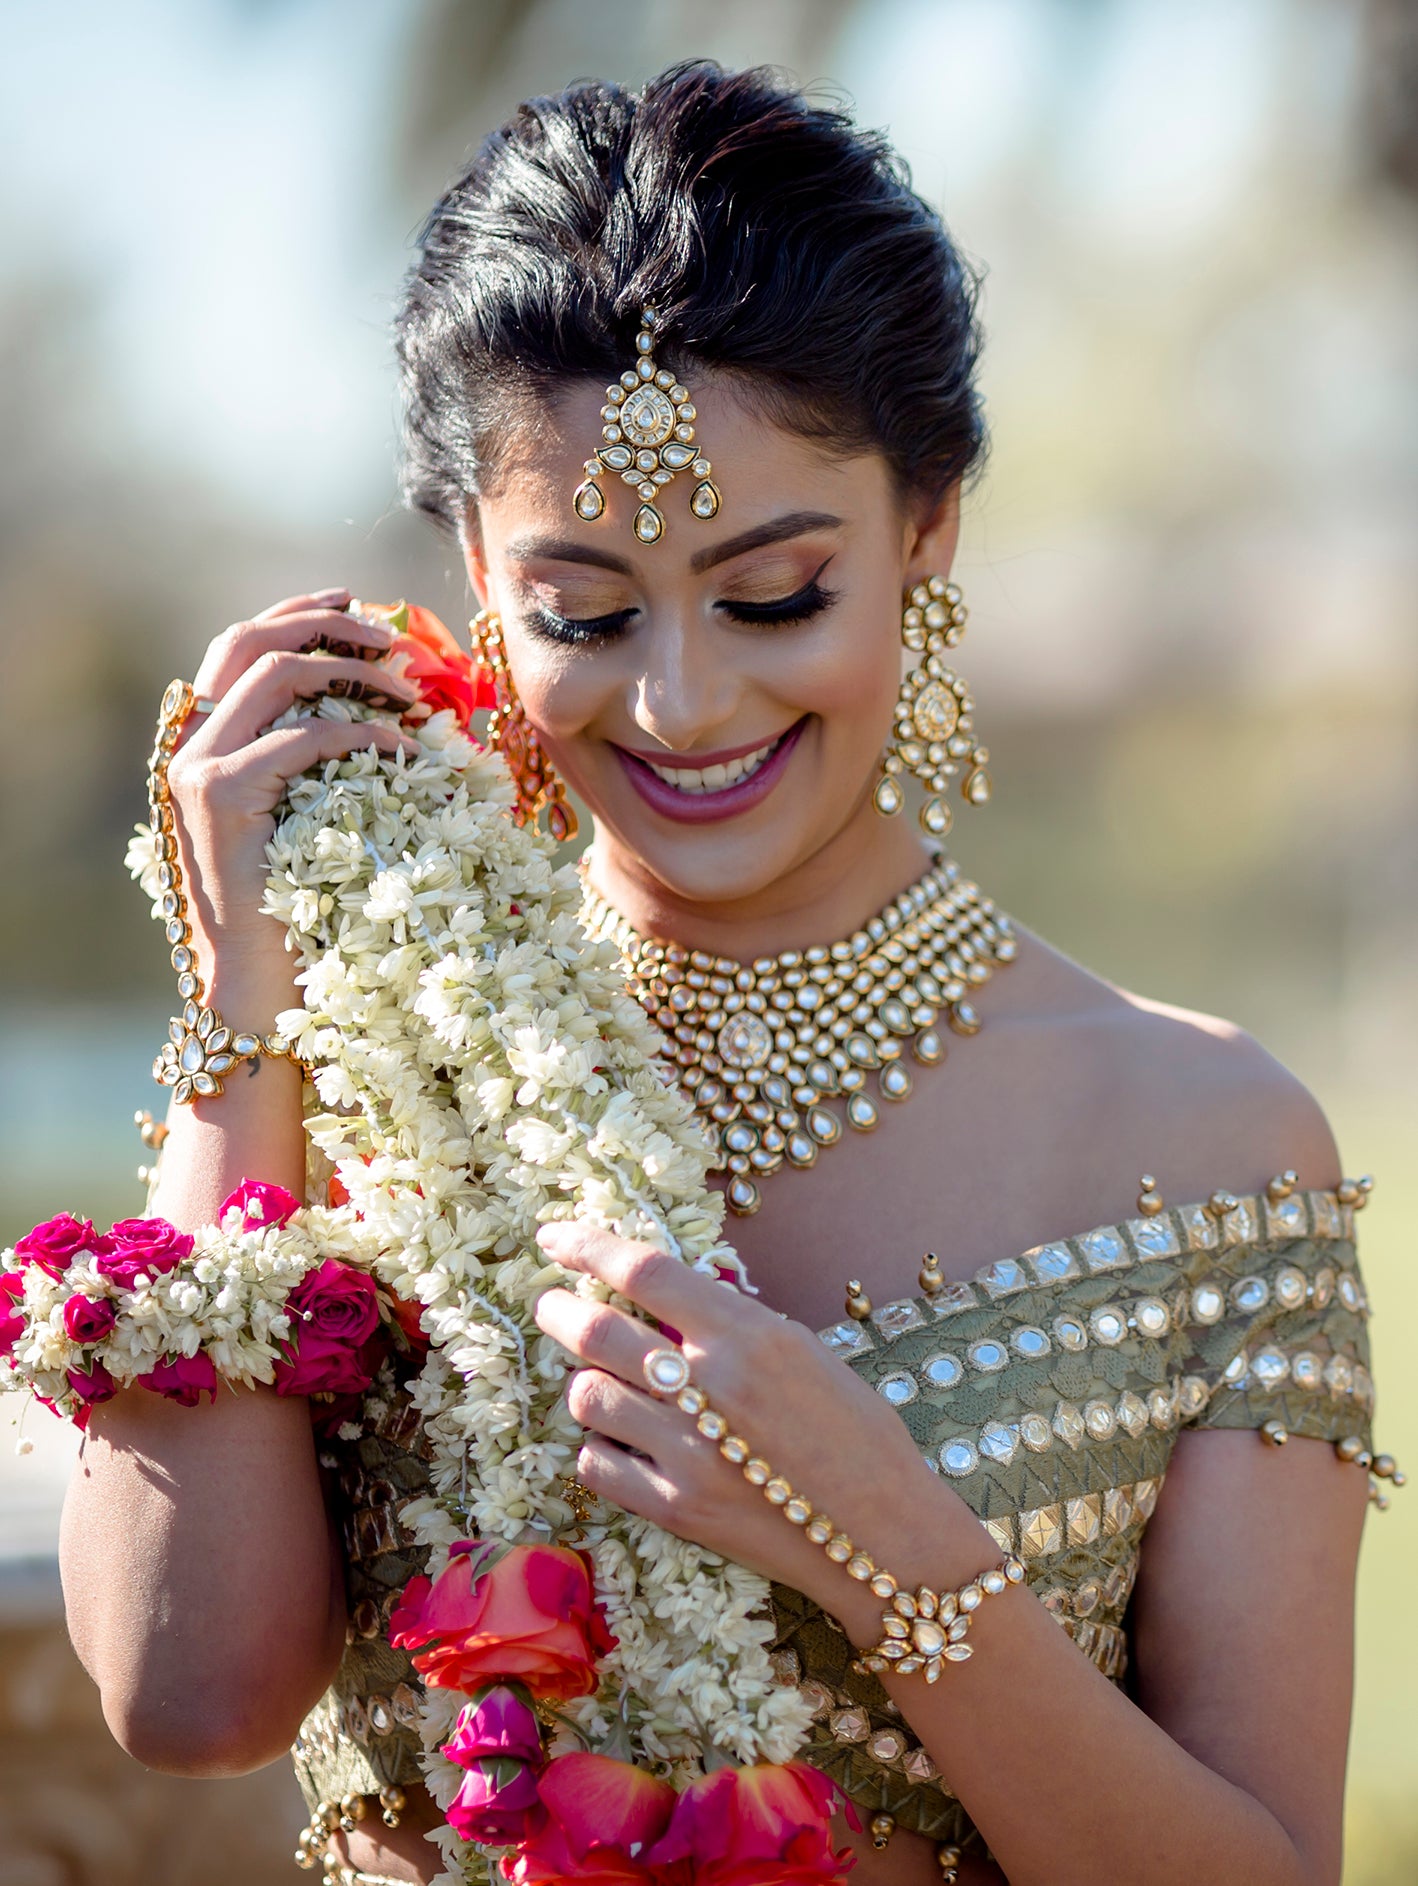 Unique beauty Bridal Dance #nofilter #nofilterneeded #bridaldance #lovit  #happybride #muashalaka #ubbride #buddhistbride #buddhistwedding #buddhism...  | By Unique BeautyFacebook